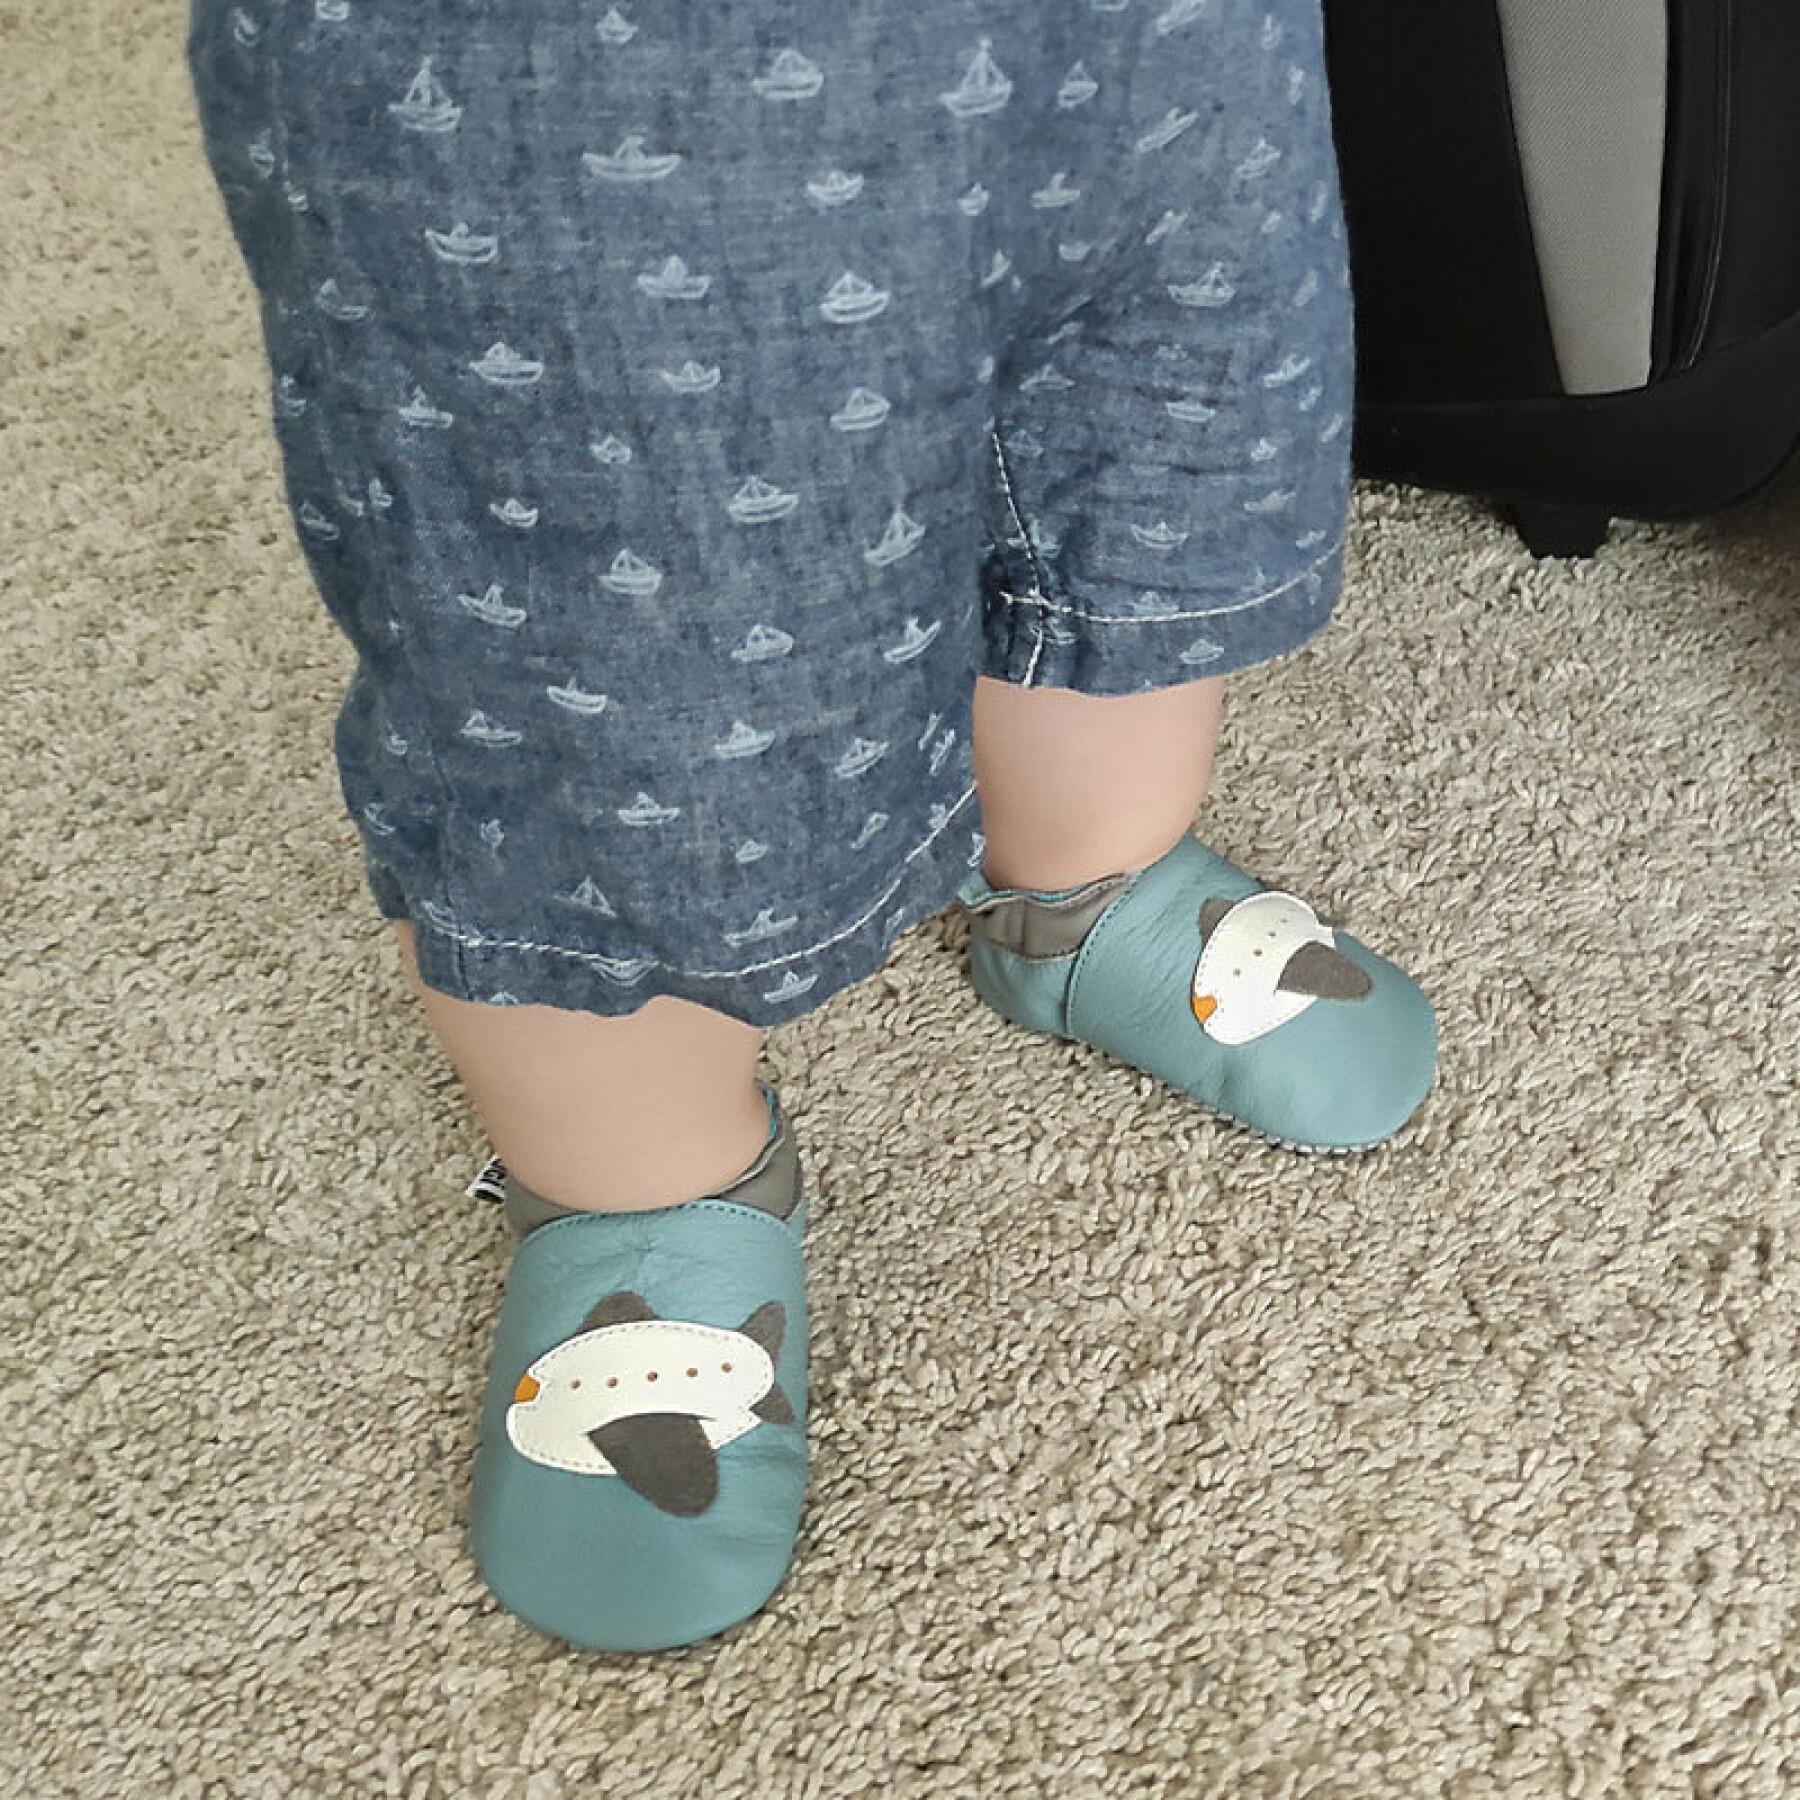 Boys' soft slippers Liliputi Jumbo